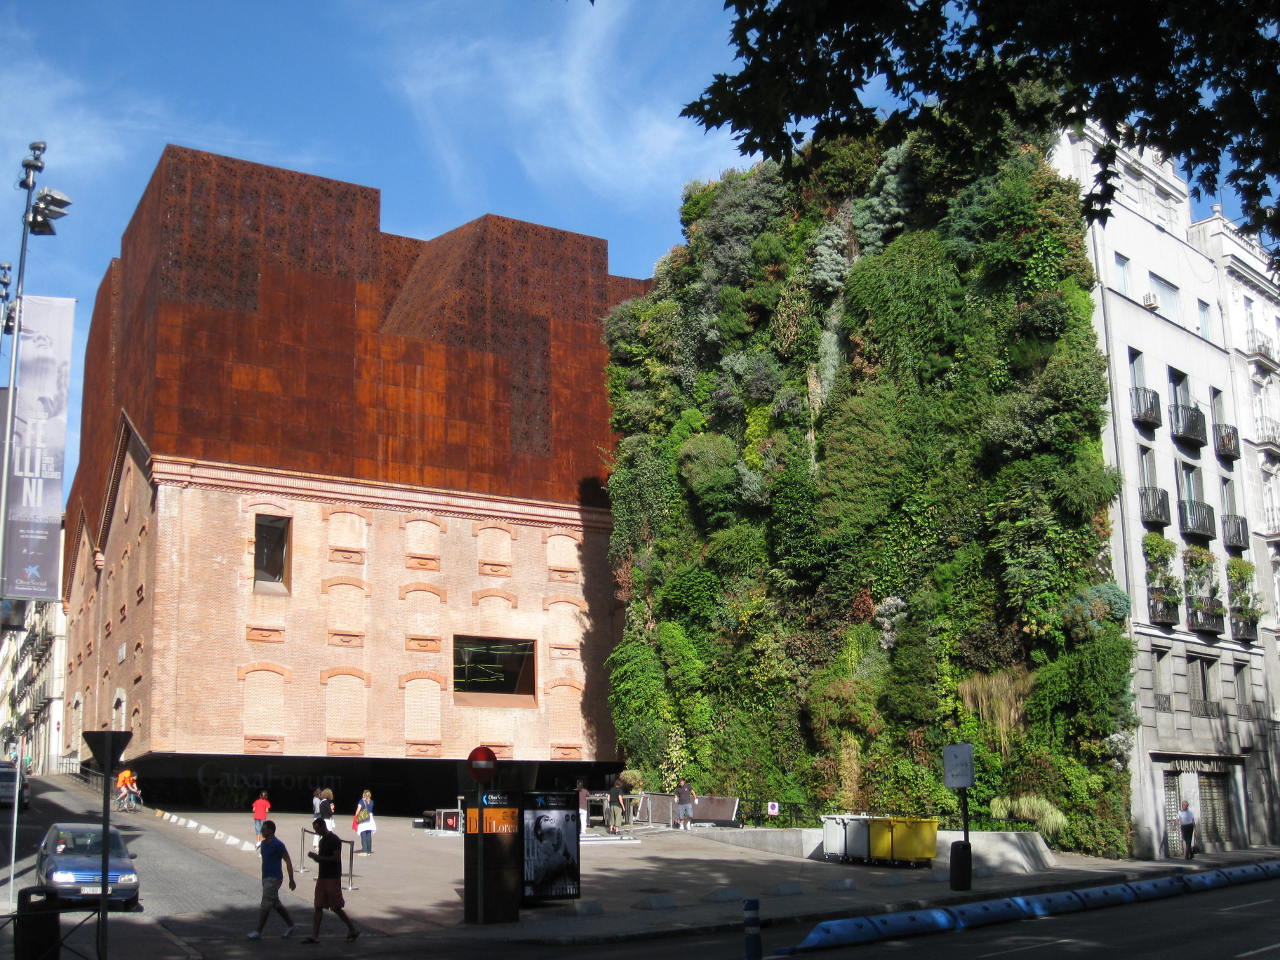 Patrick Blanc's Vertical Garden and Caixa Forum in Madrid, Spain